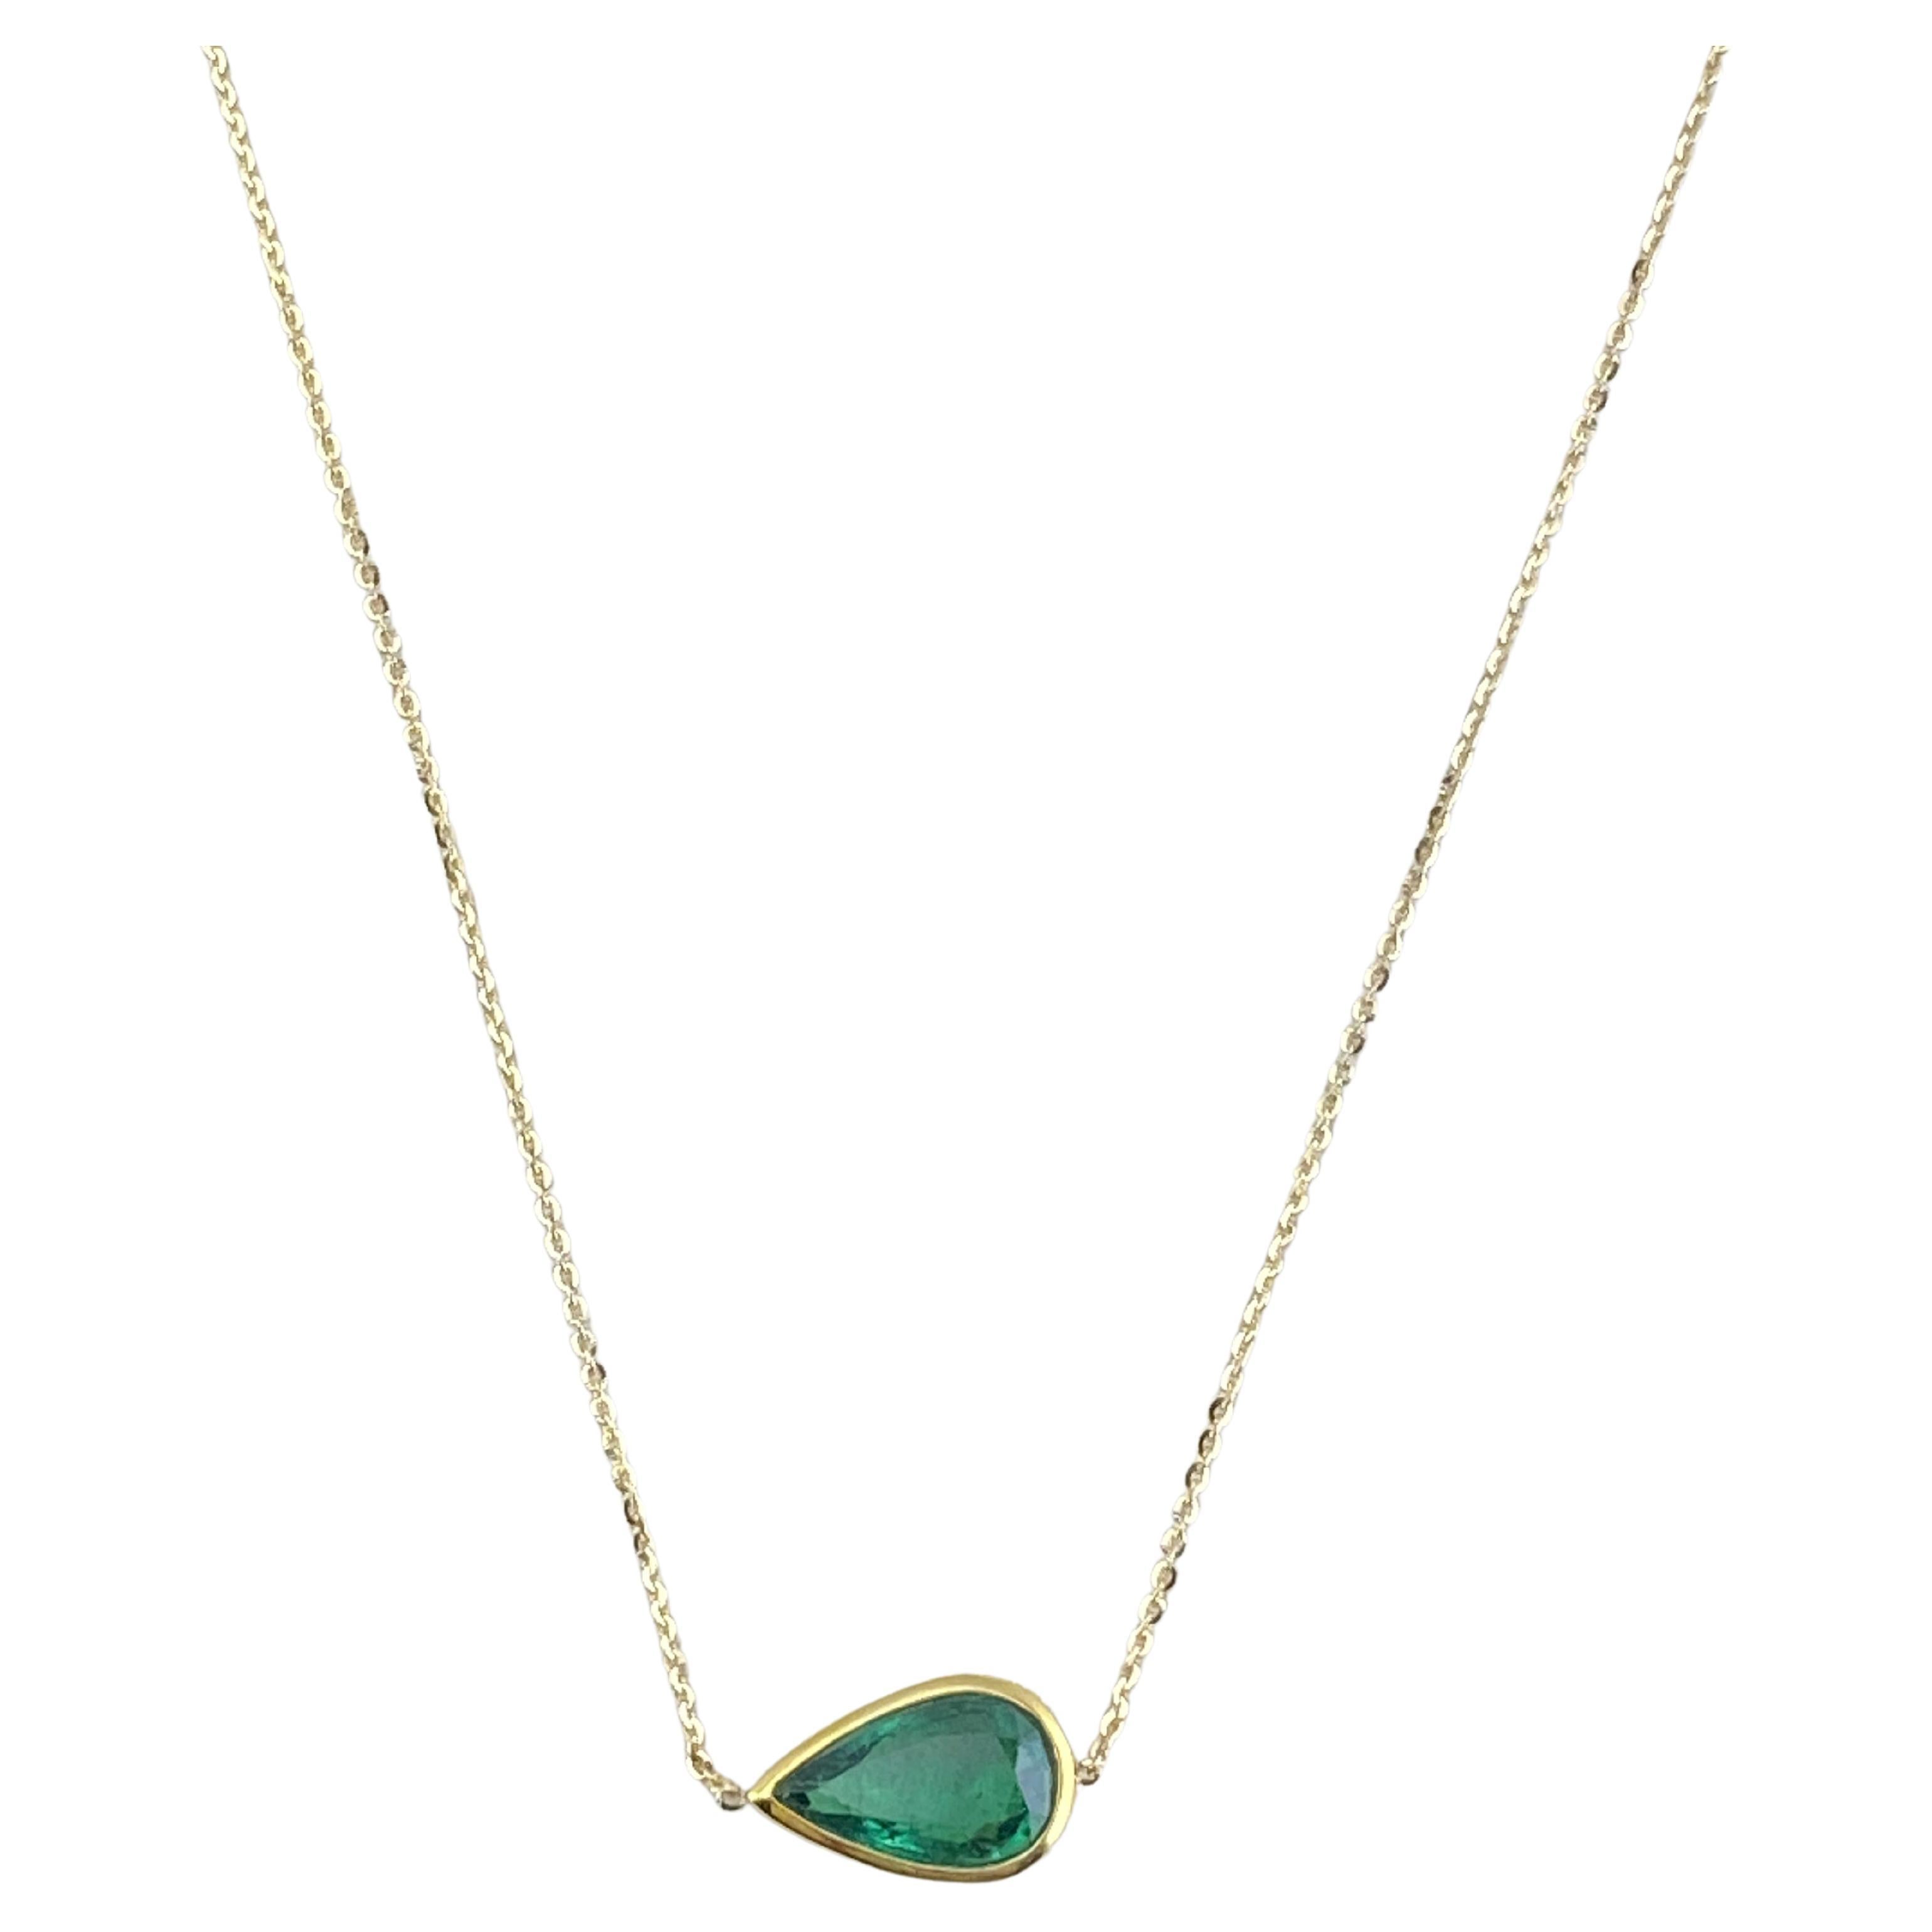 Certified 1.65 Carat Pear Shape Emerald Pendant Chain Necklace